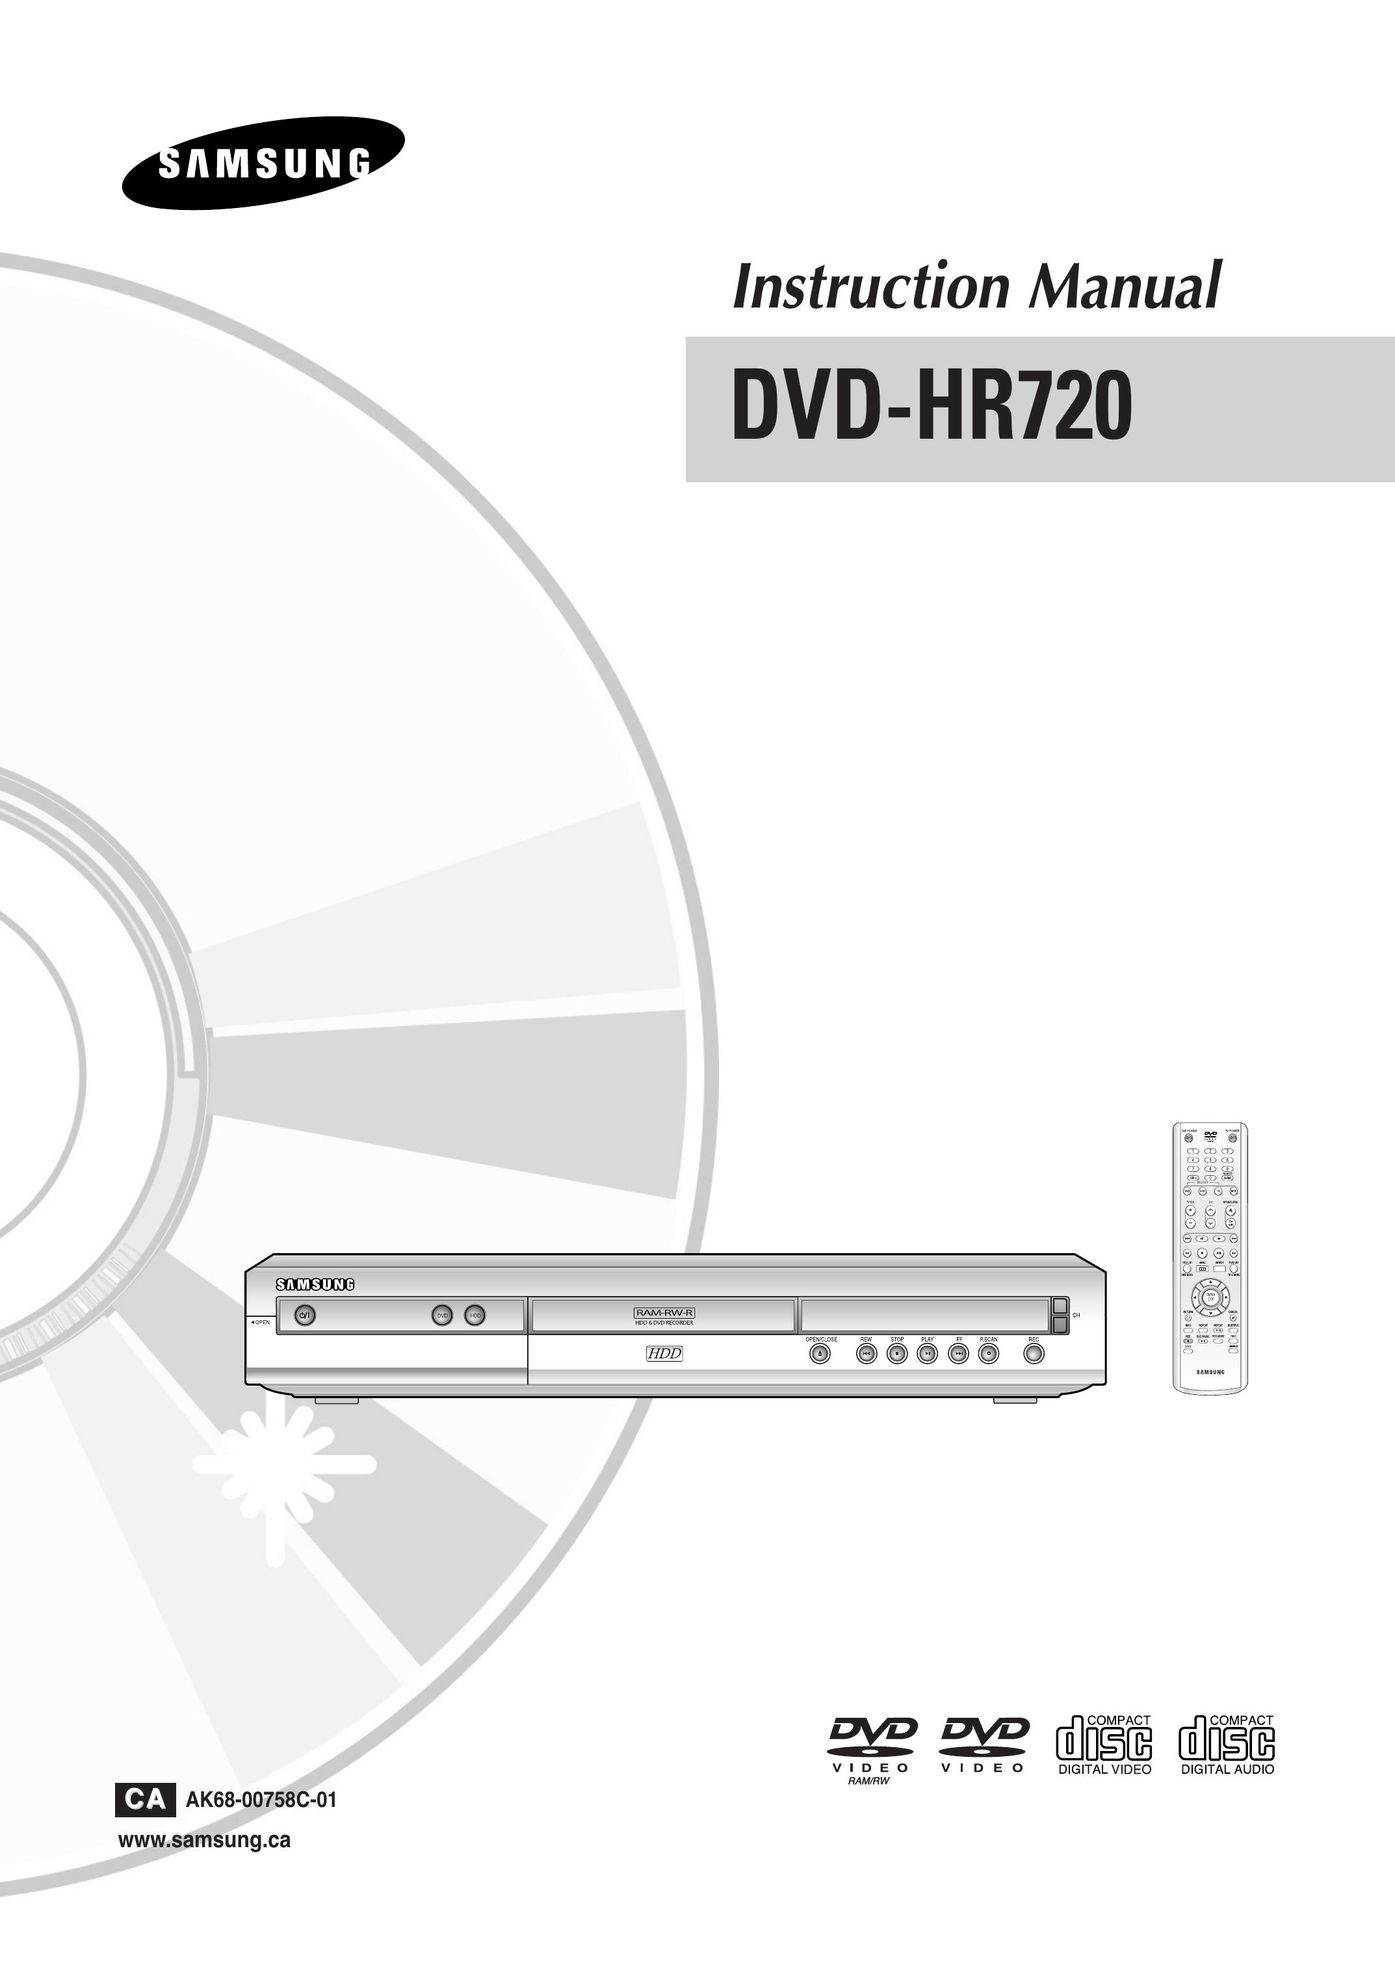 Samsung DVD-HR720 MP3 Player User Manual